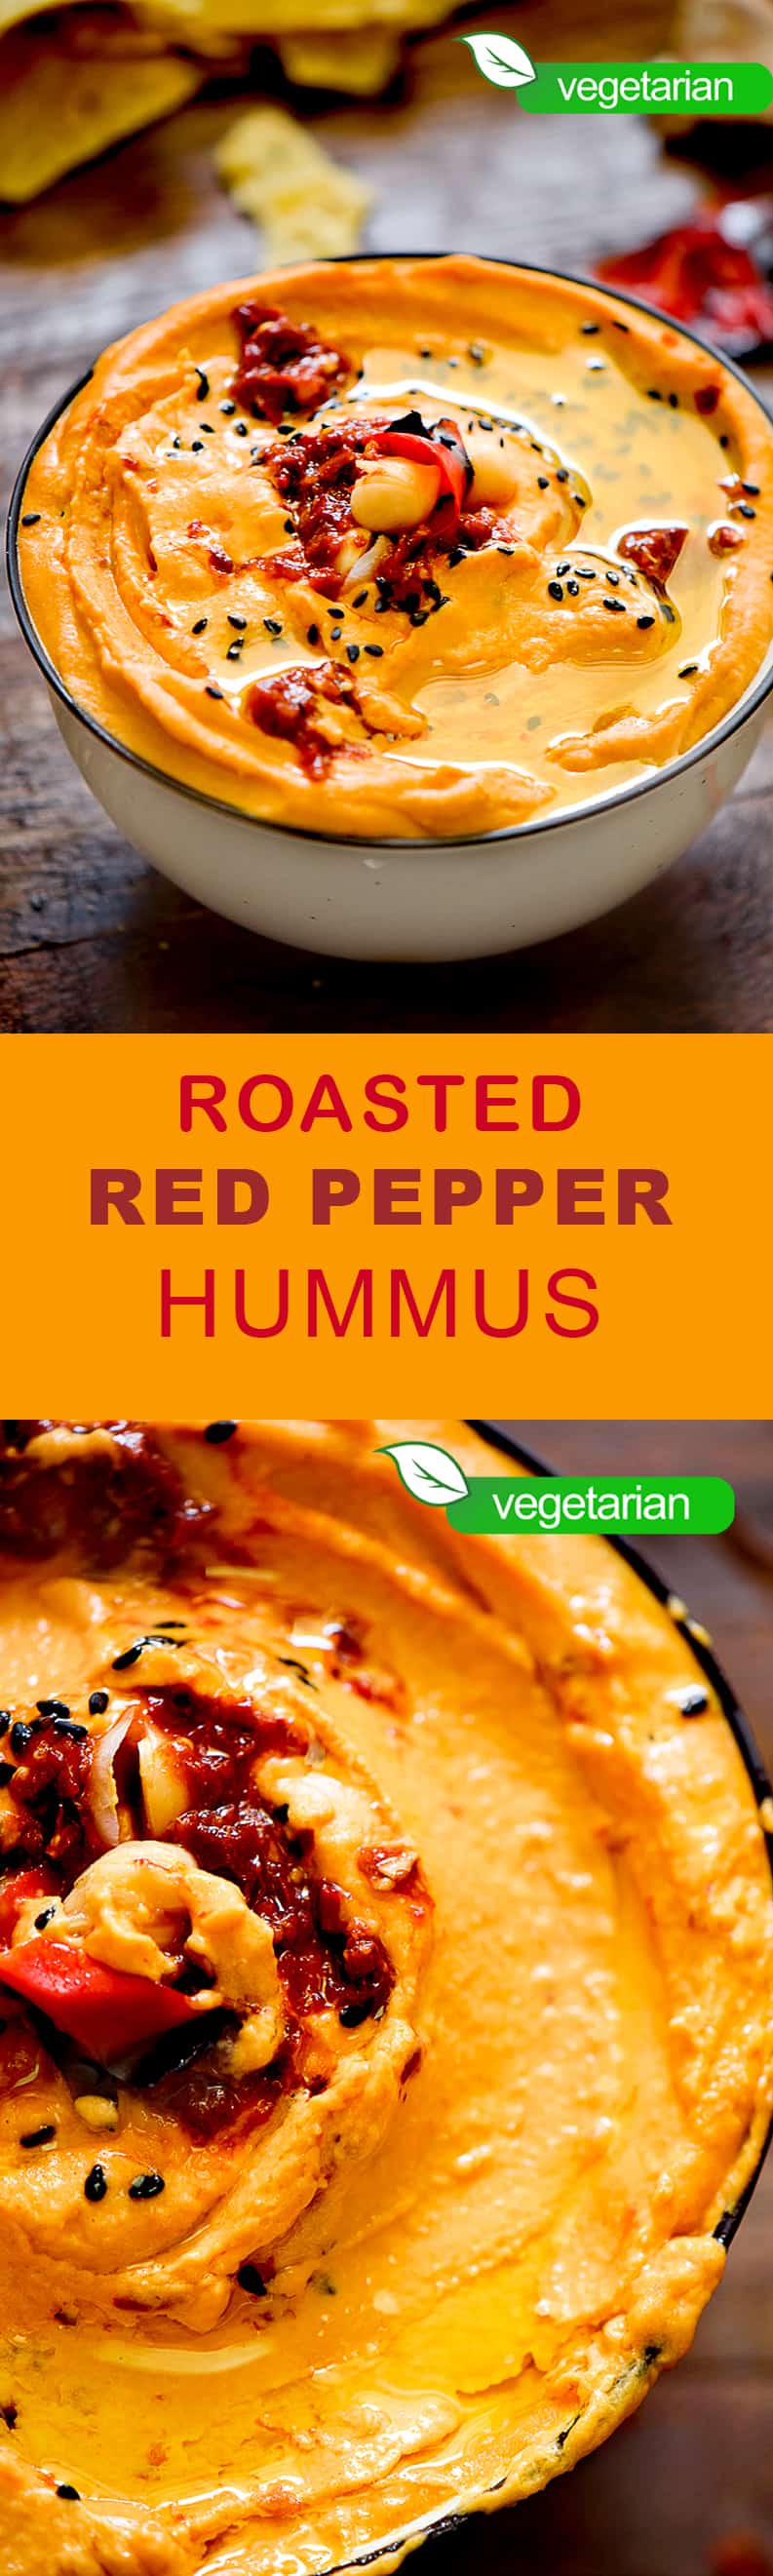 Red pepper hummus